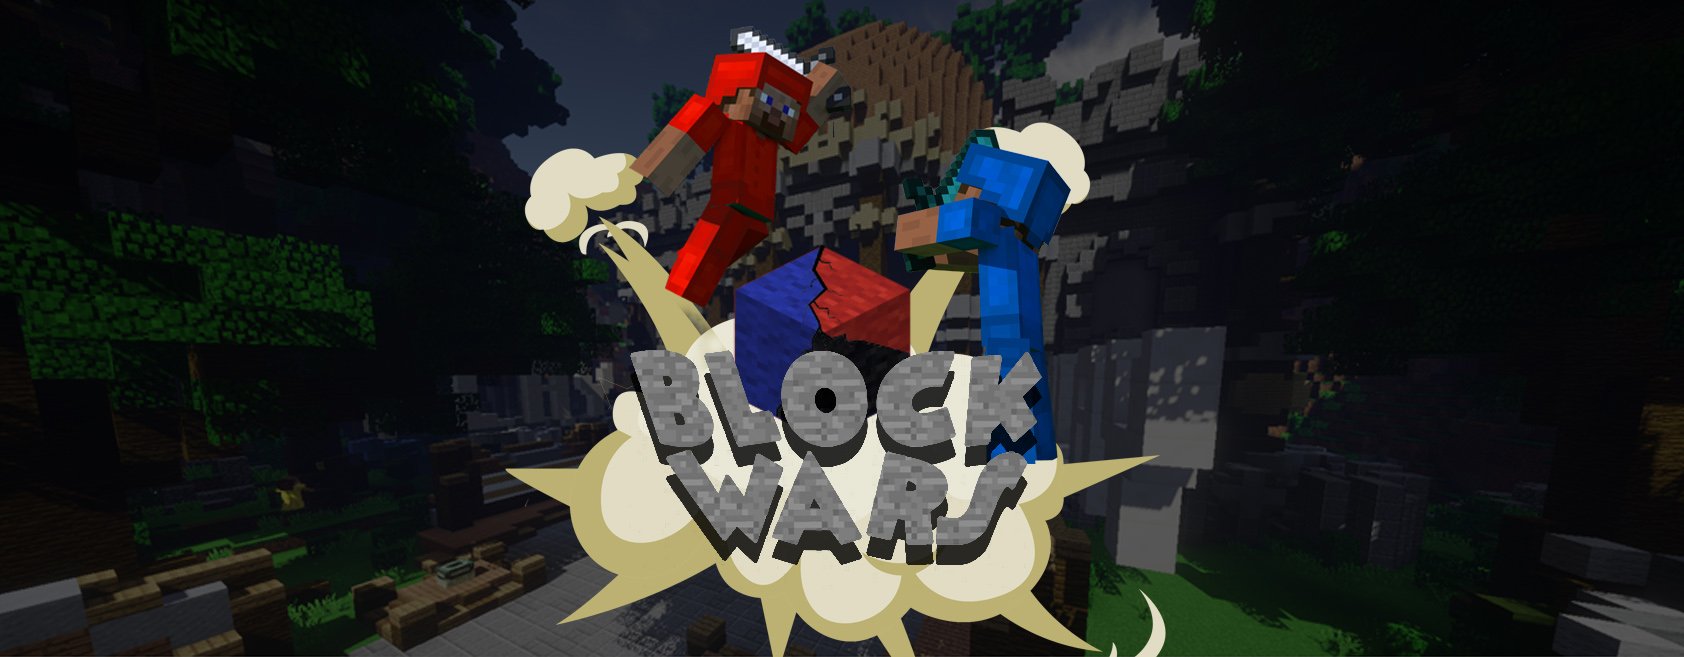 Block Wars.jpg